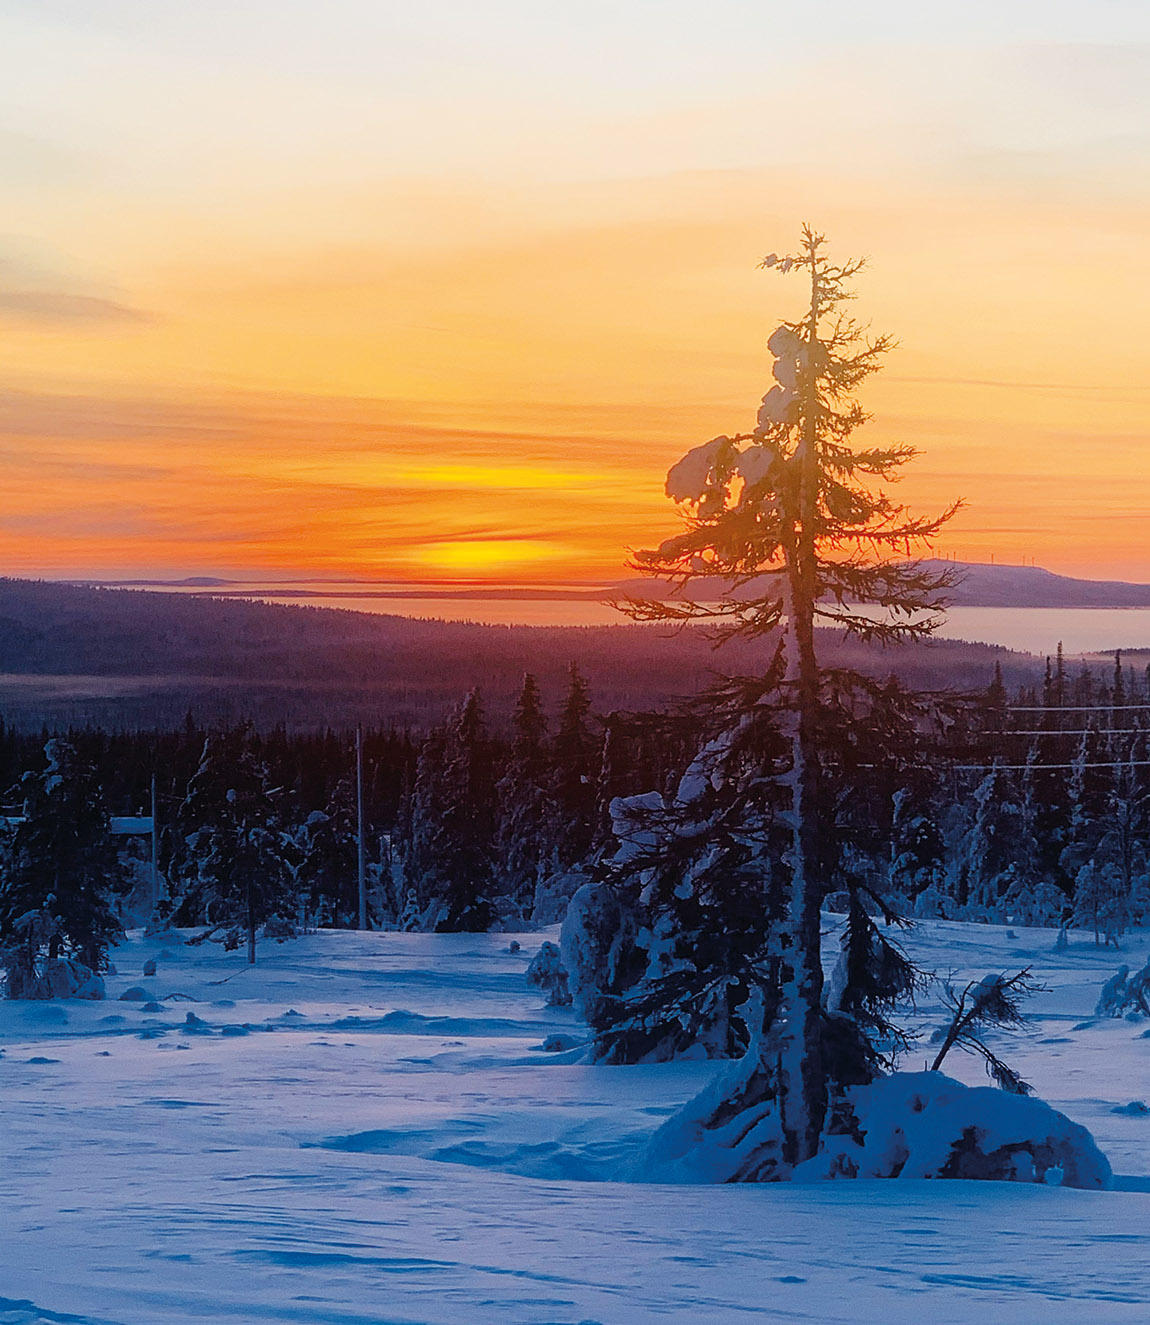 Lappland Dream: Eight seasons, two villas, one Lappland Dream